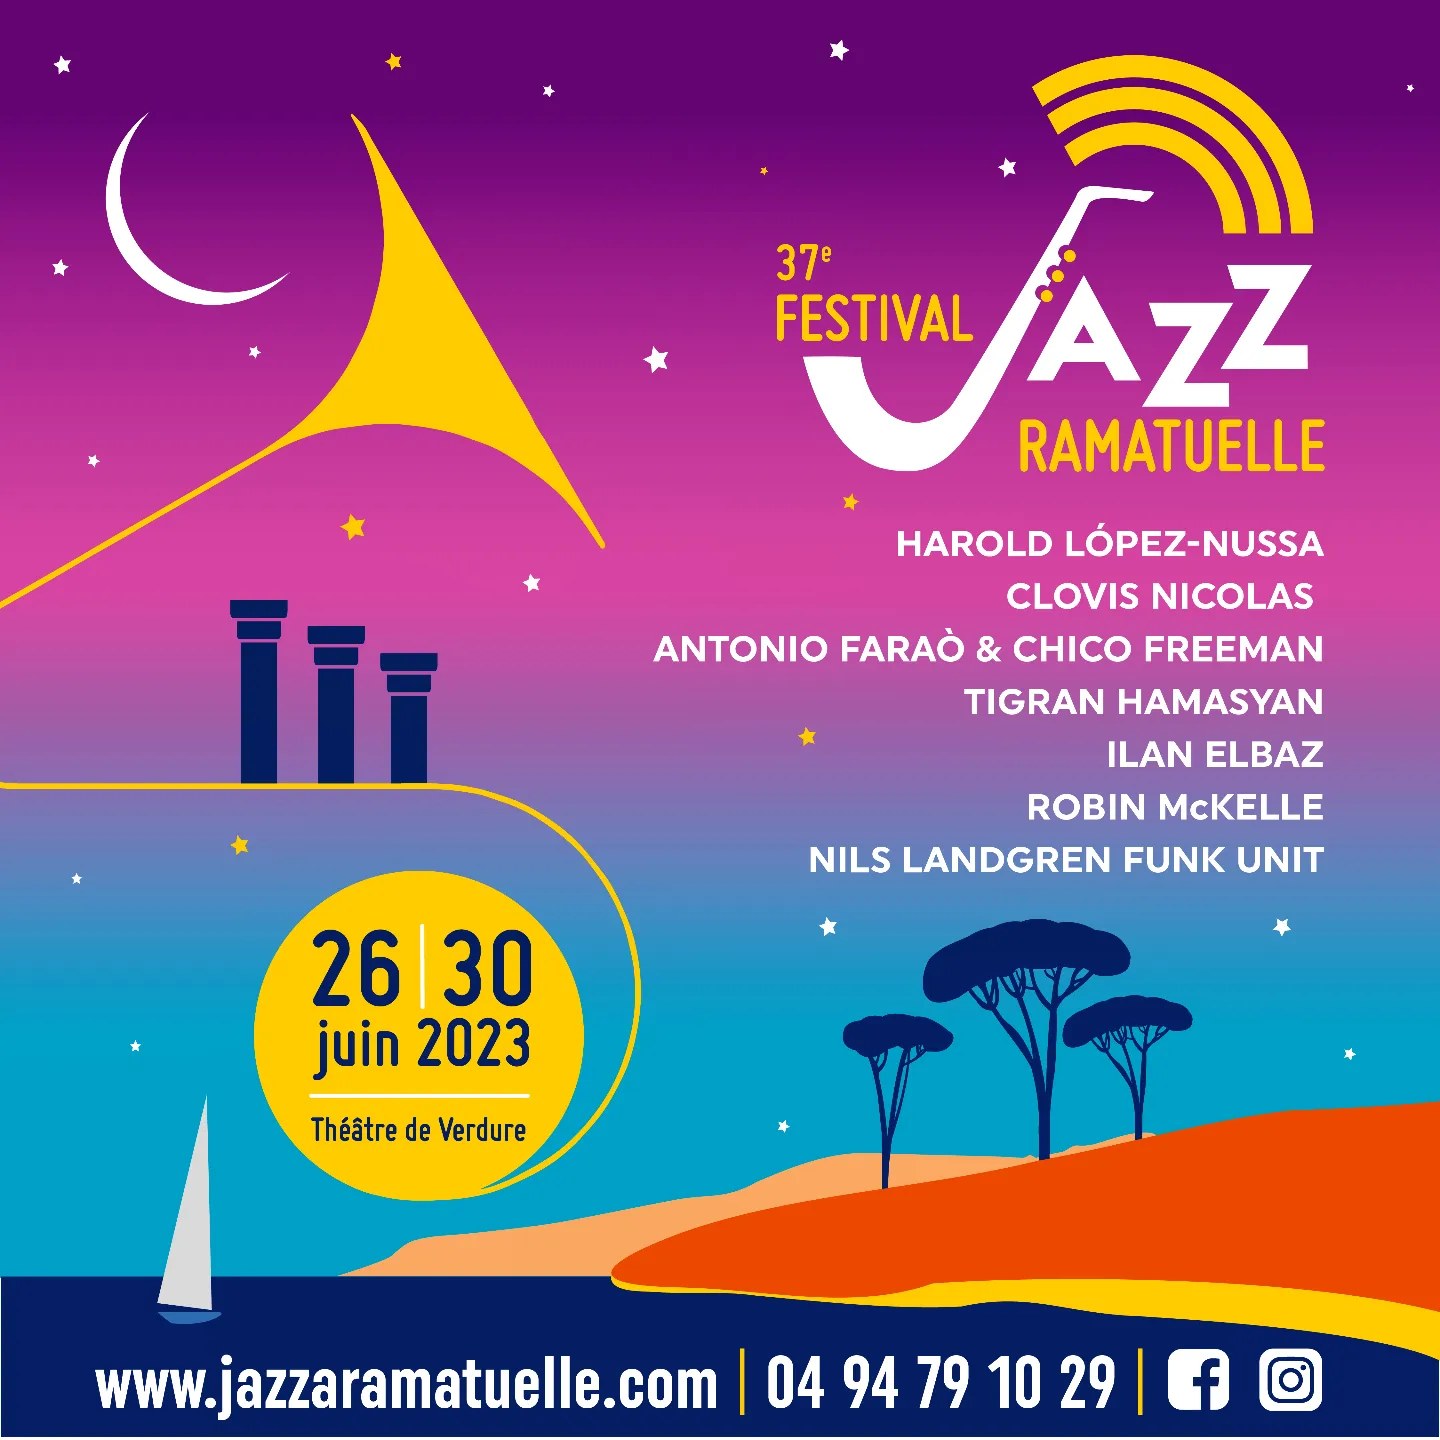 Jazz a Ramatuelle Aff carré 23 